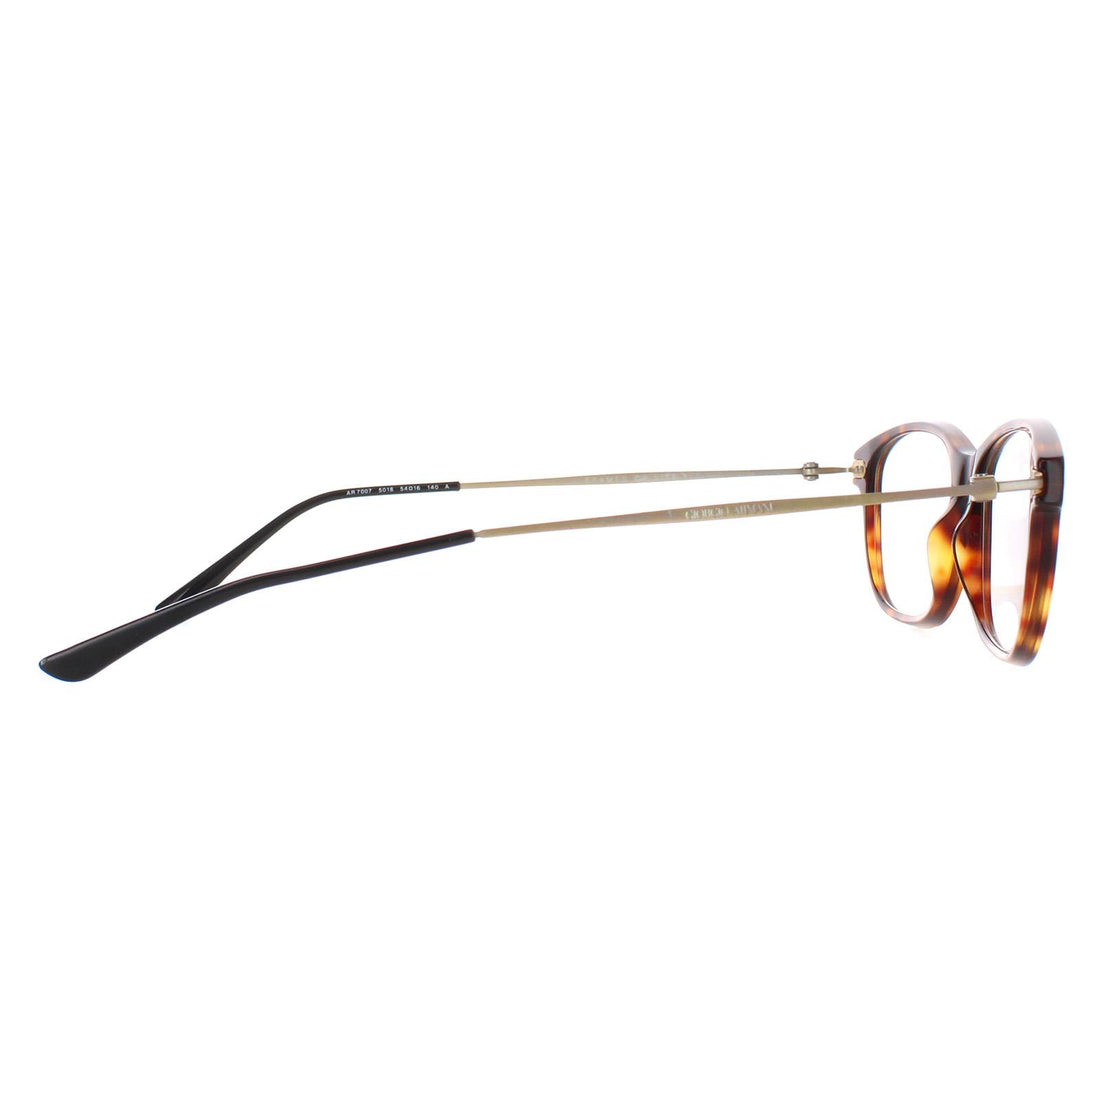 Giorgio Armani Glasses Frames AR7007 5018 Havana 54mm Womens